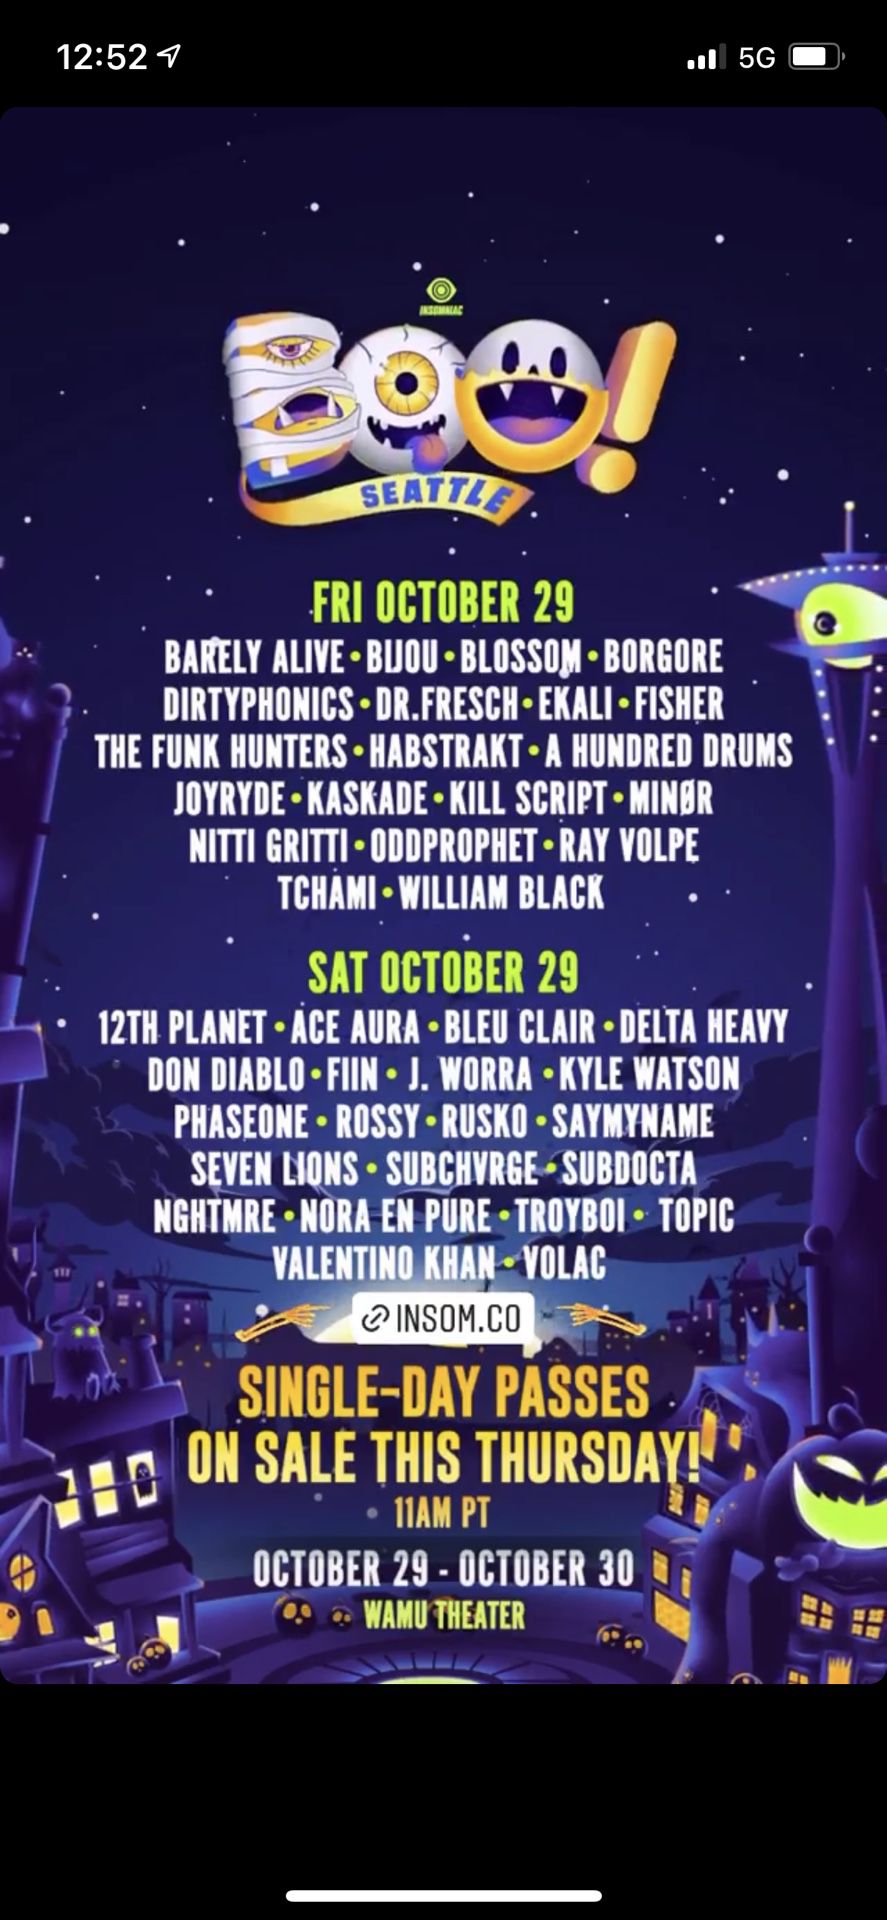 BOO SEATTLE festival Oct. 29th-30th